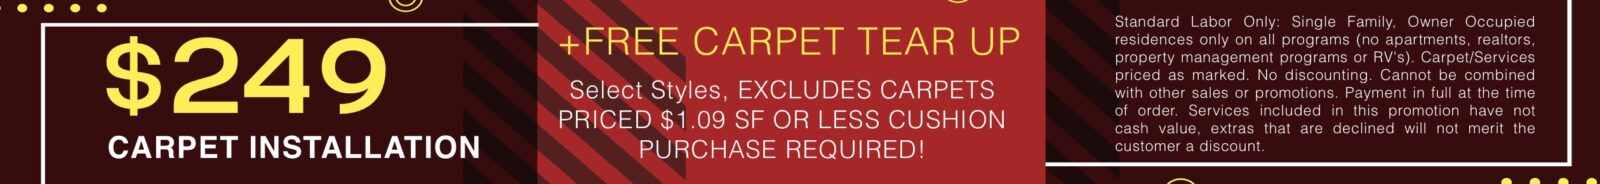 $249 Carpet Installation + Free Carpet Tear Up | Big Bob's Flooring Outlet Yuma